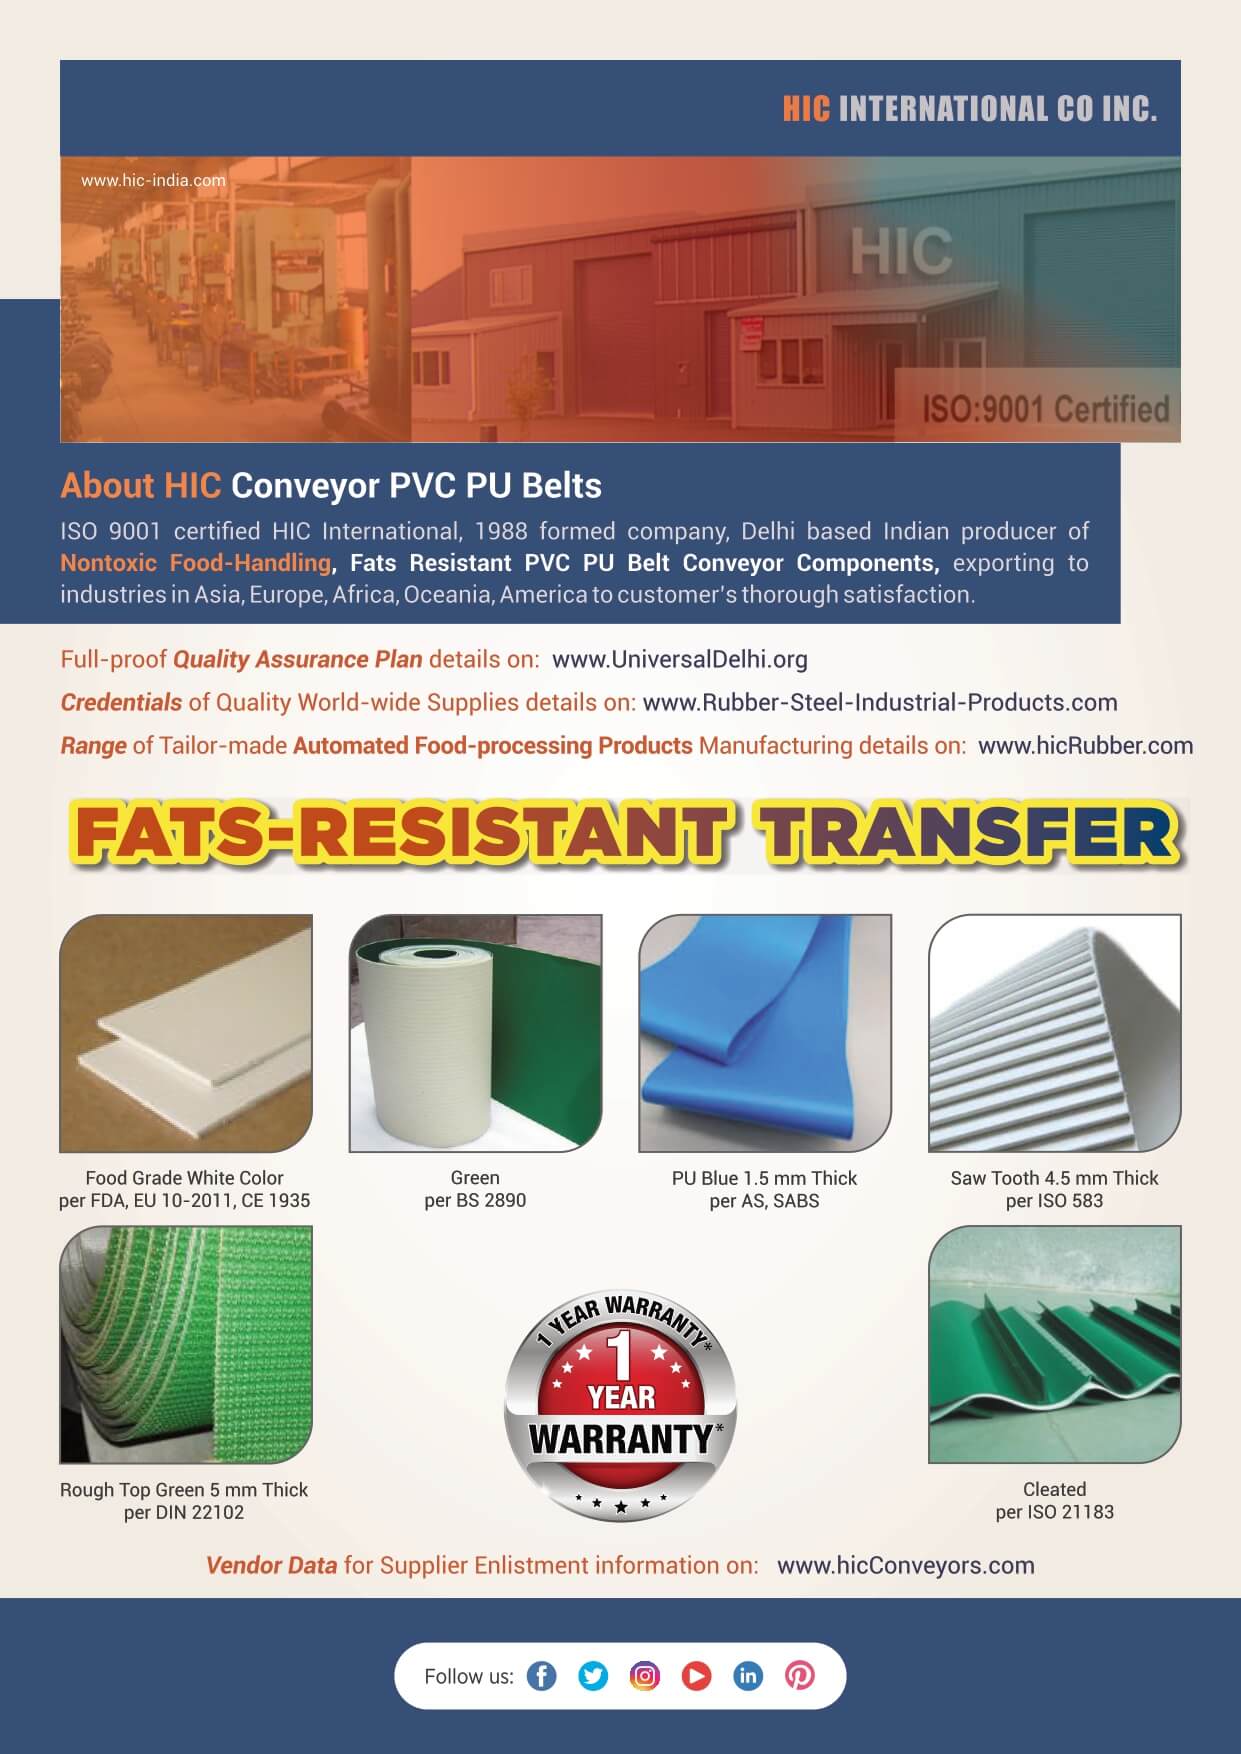 Literature Conveyor PVC PU Belts